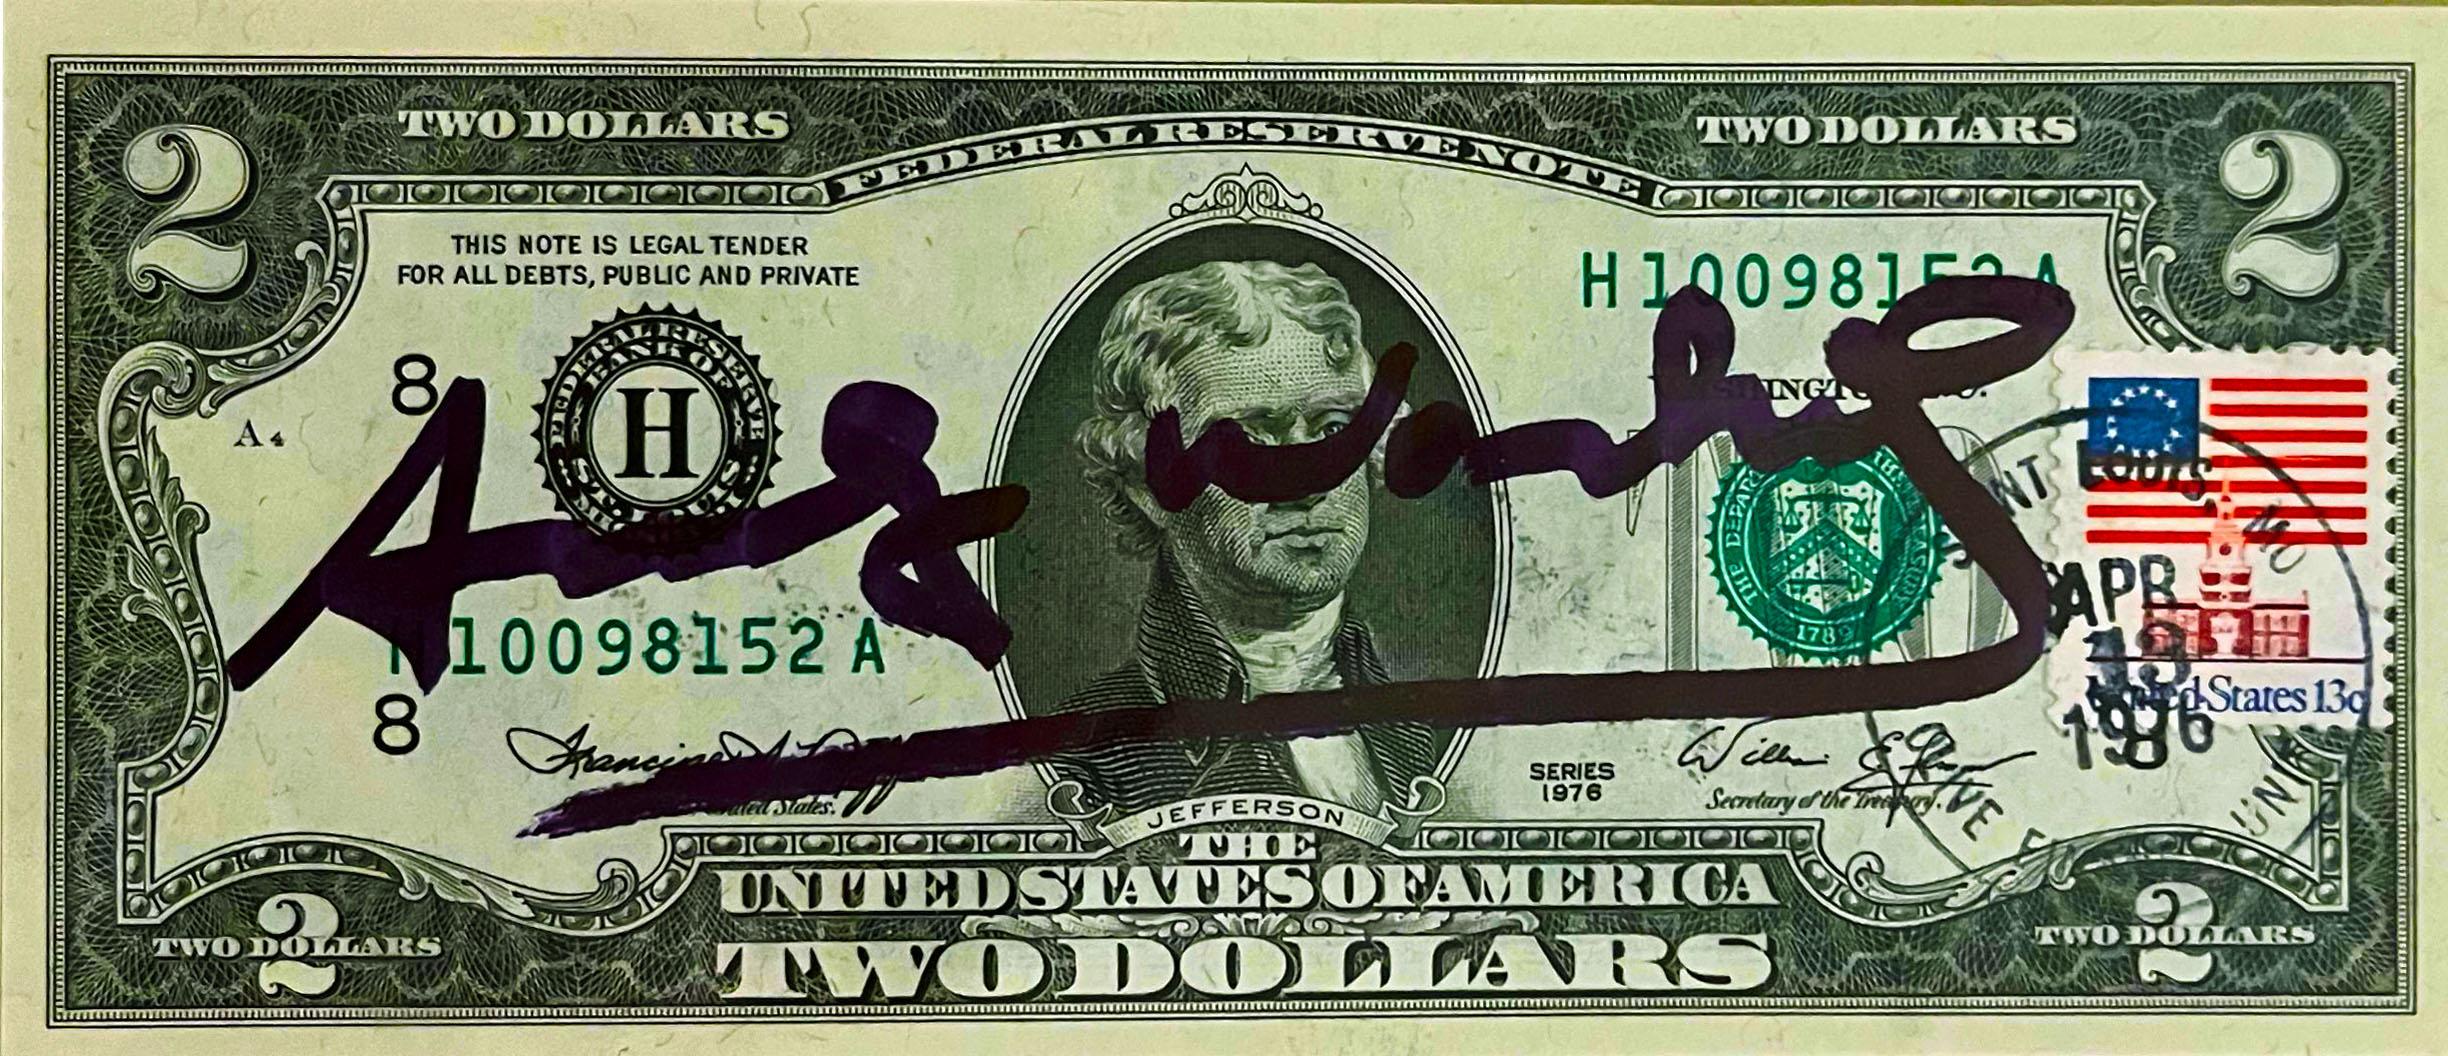 2 Dollars banknote - Mixed Media Art by Andy Warhol